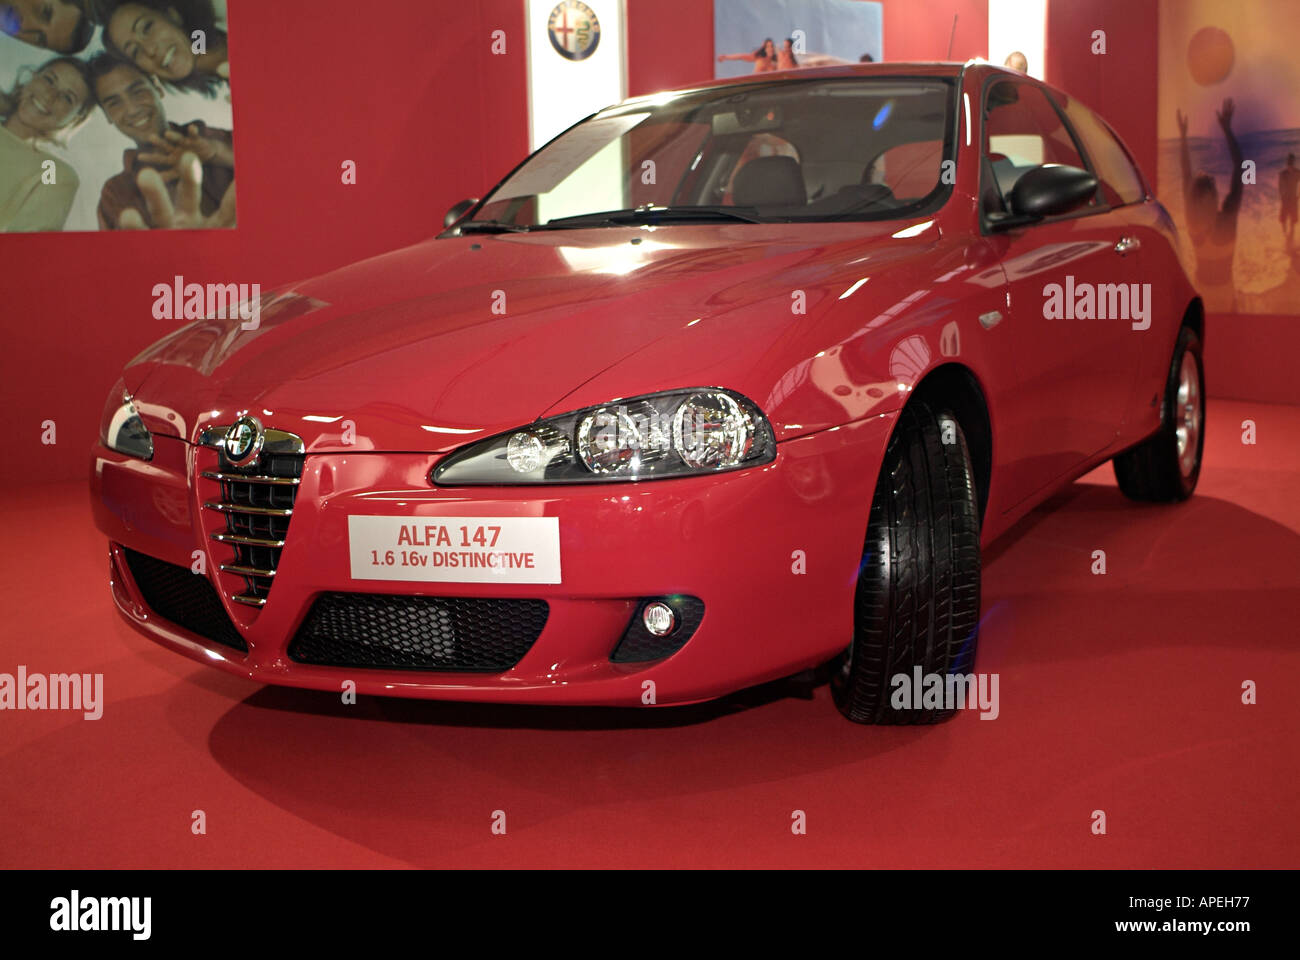 File:2010 Alfa Romeo 147 Moving.JPG - Wikimedia Commons